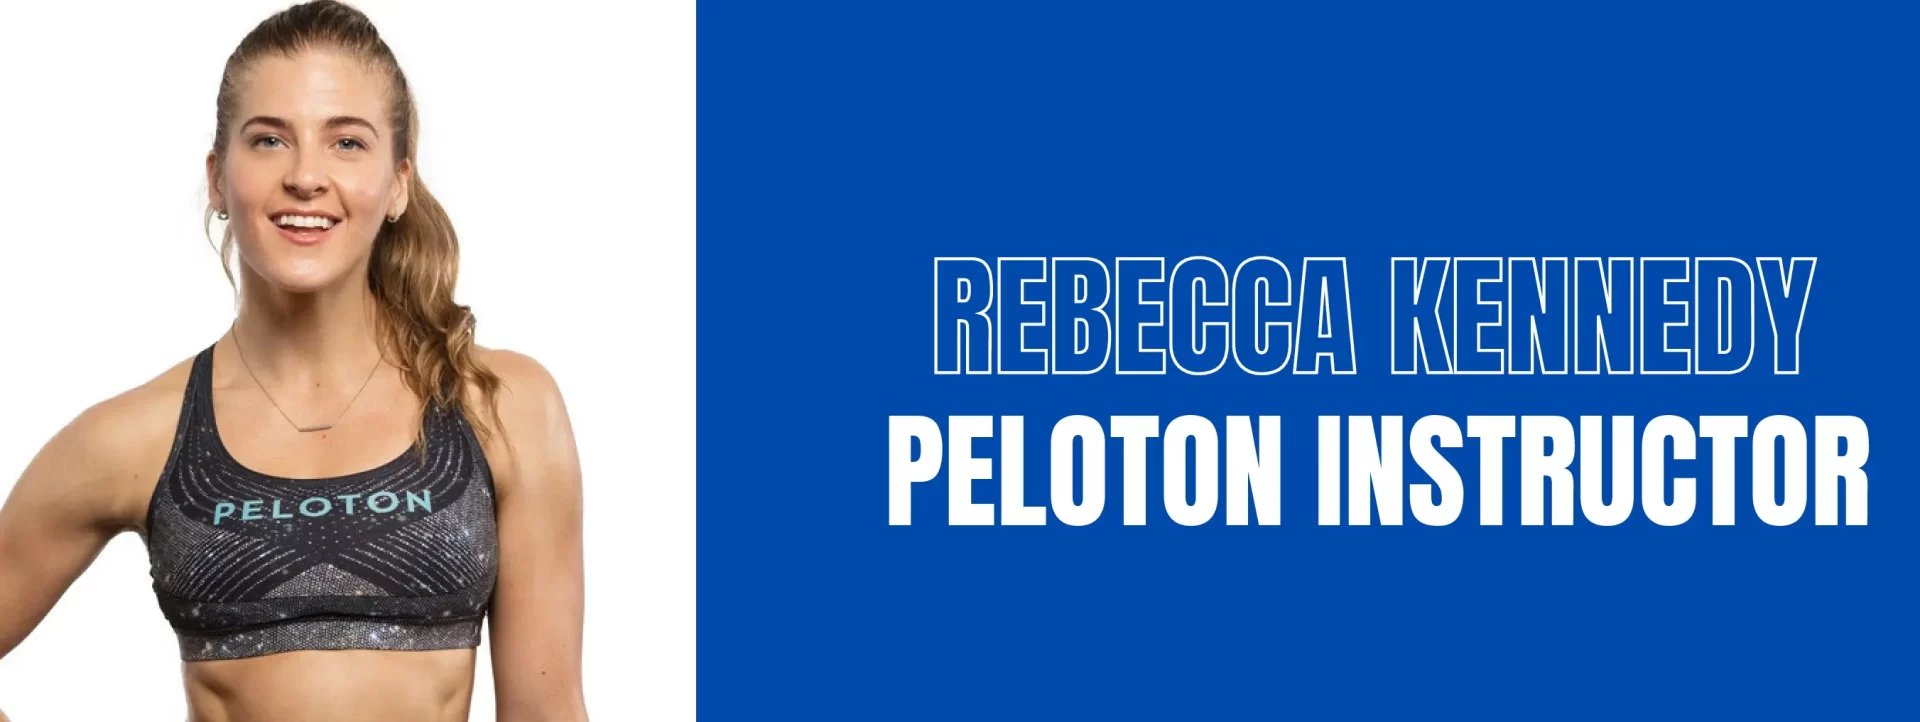 Rebecca Kennedy Peloton Instructor